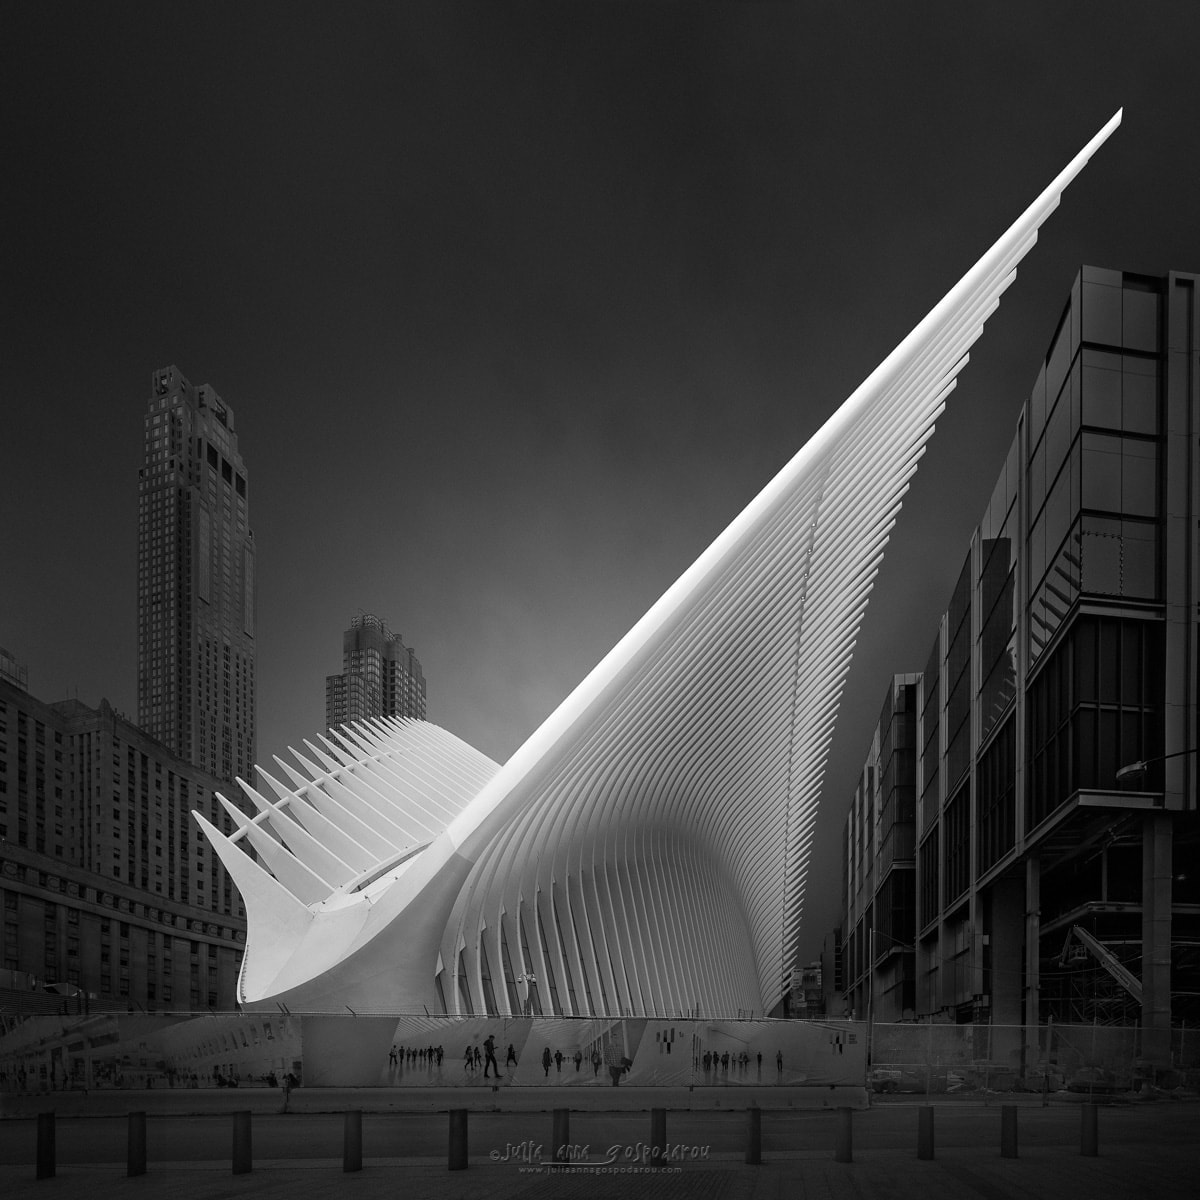 Julia Anna Gospodarou - Flying Away IV - New York - long exposure photography in an urban environment oculus new york santiago calatrava architect